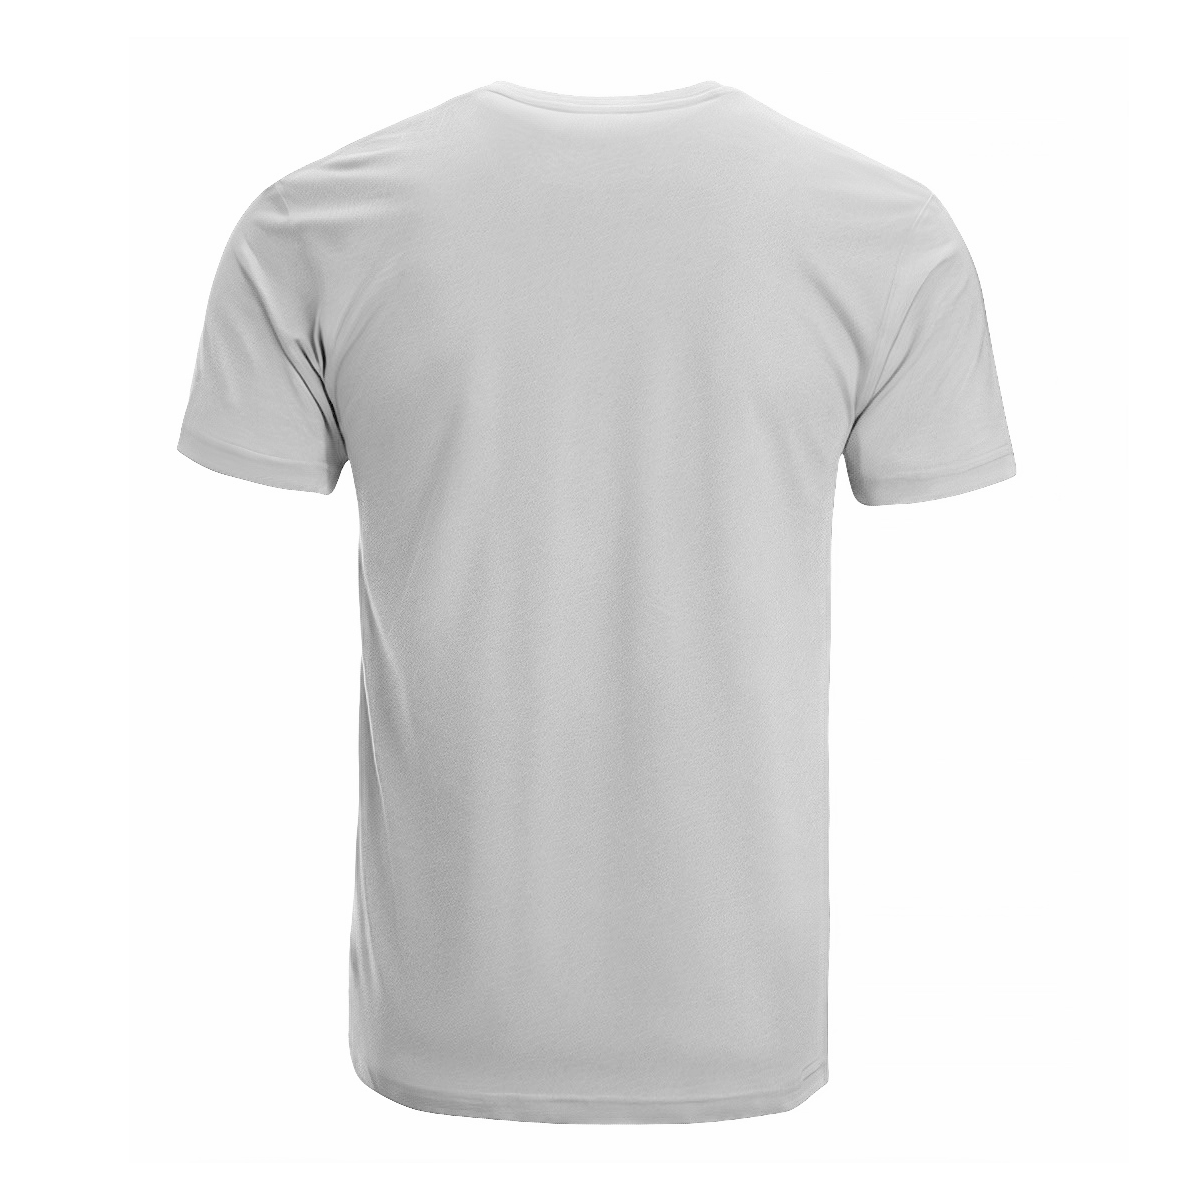 Cockburn Tartan Crest T-shirt - I'm not yelling style